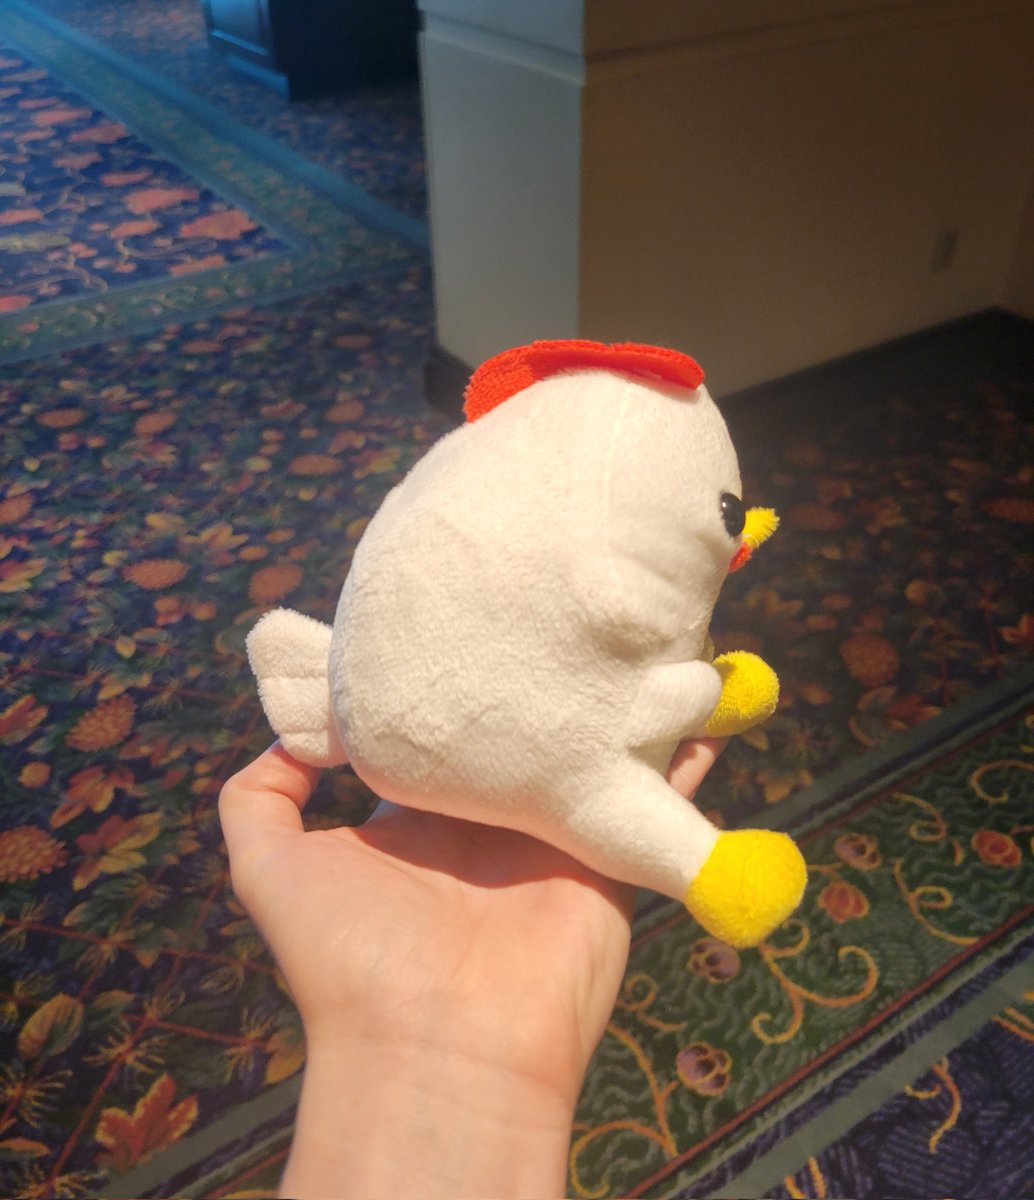 Look at this chicken plush we won at a casino arcade